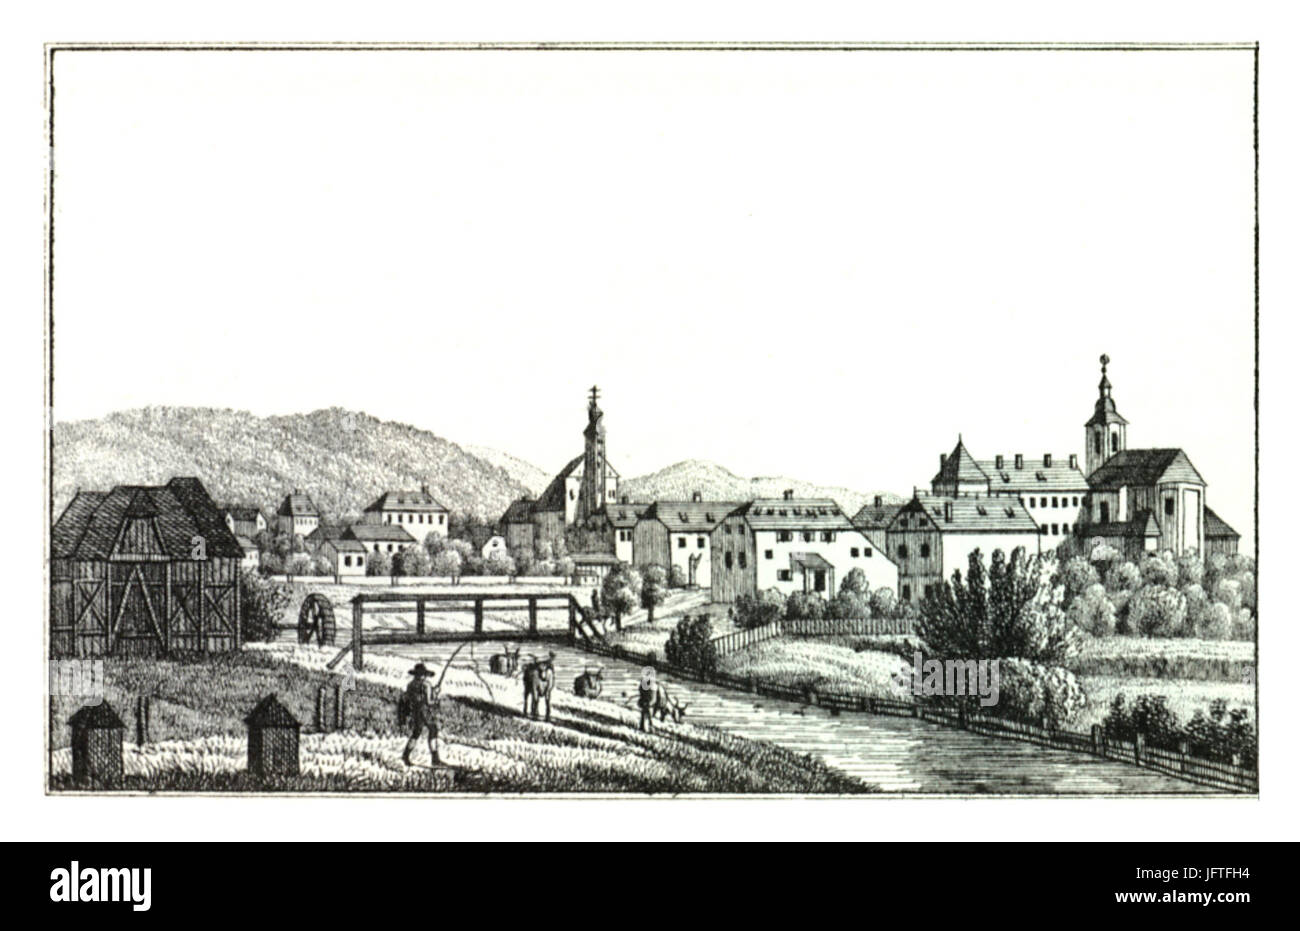 061 Markt Gleisdorf im Grätzer Kreis, L. Kröll - J.F.Kaiser Lithografirte Ansichten der Steiermark 1830 Stock Photo